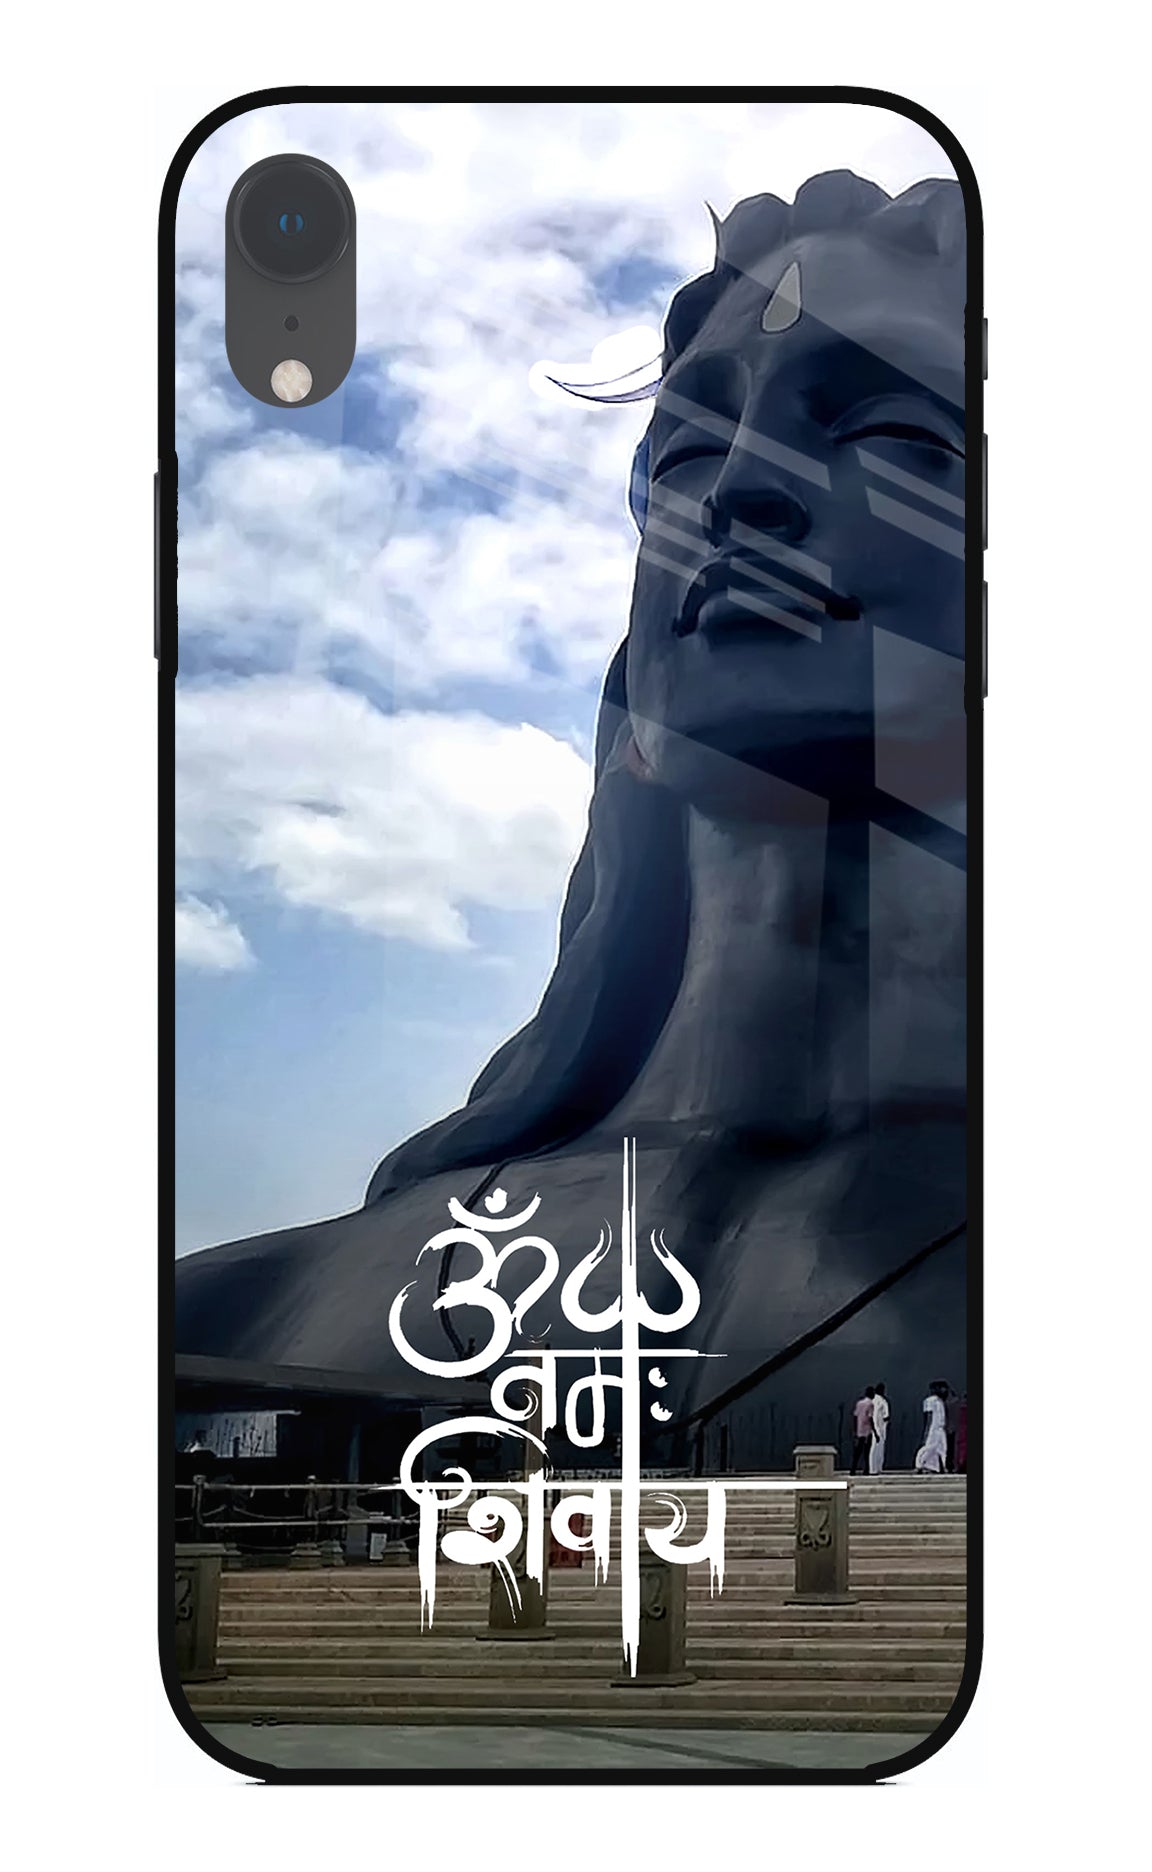 Om Namah Shivay iPhone XR Back Cover